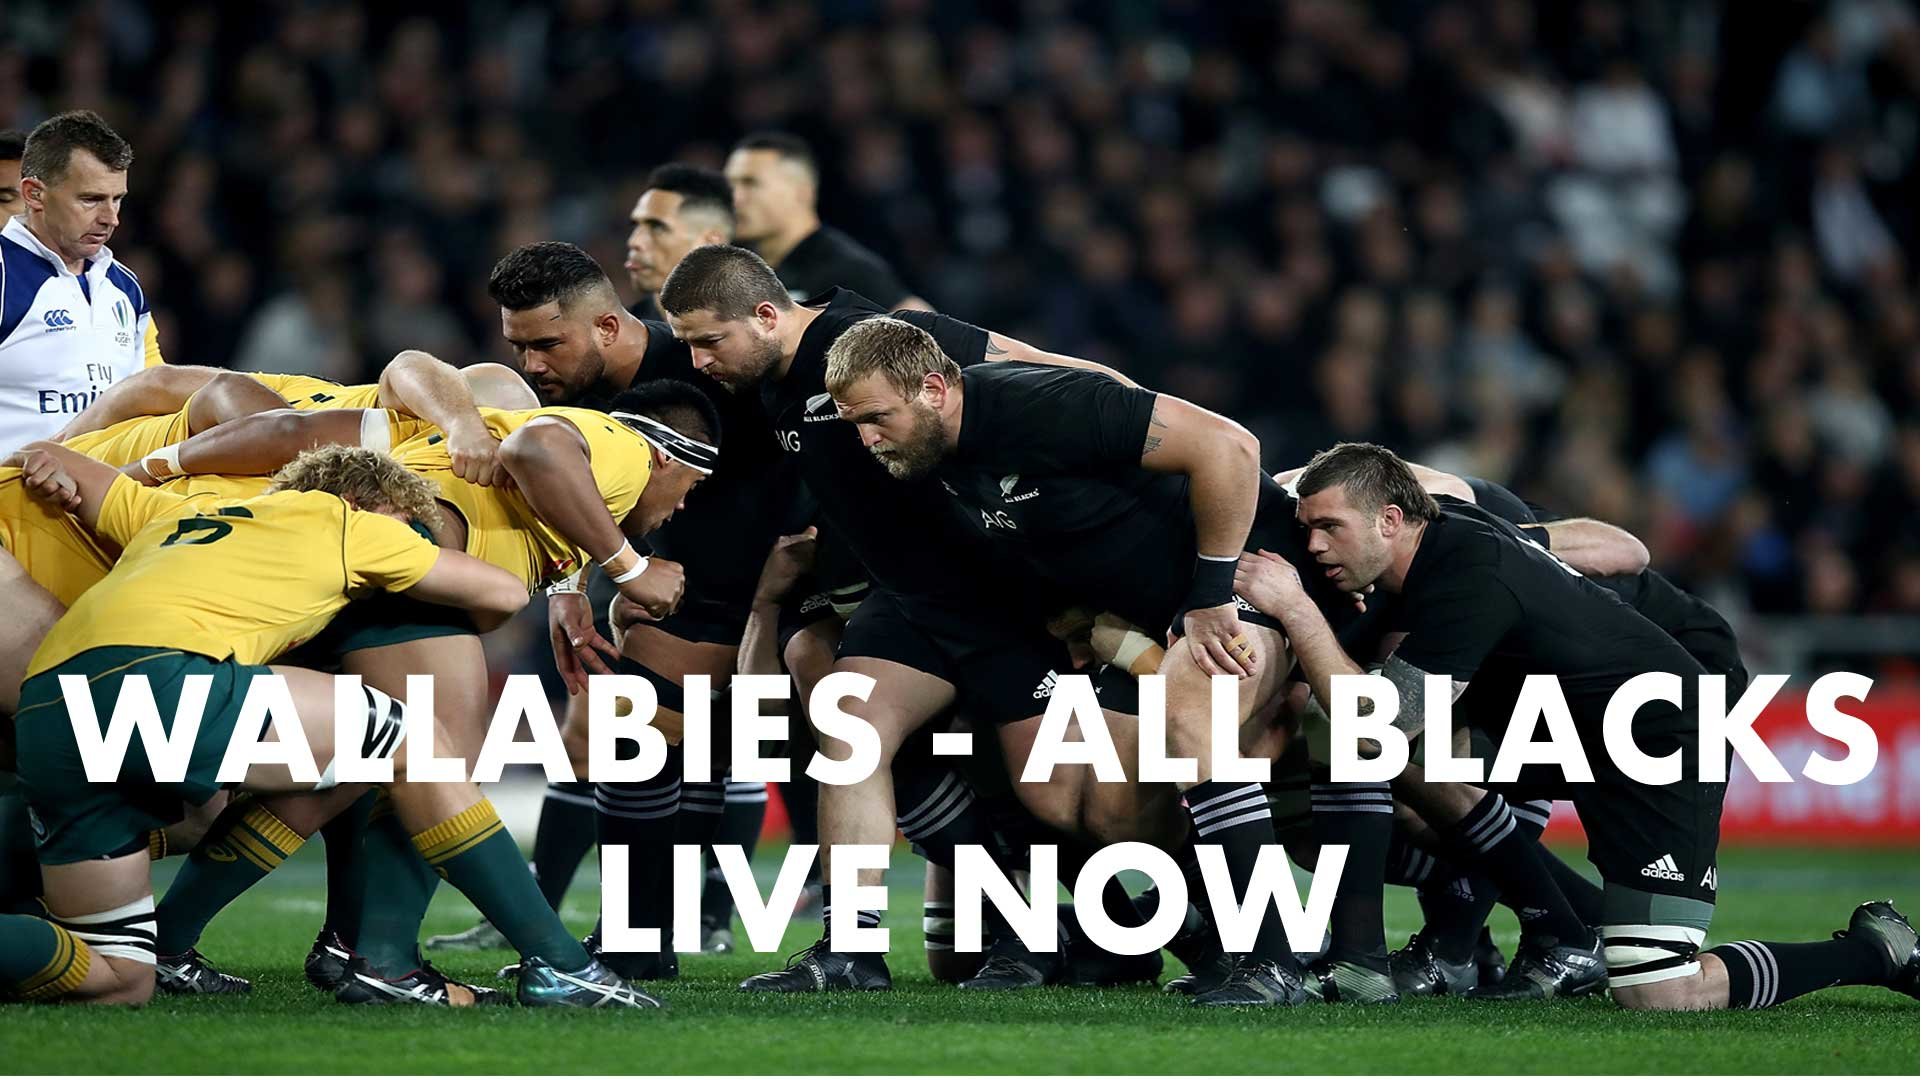 Live Now Wallabies v All Blacks